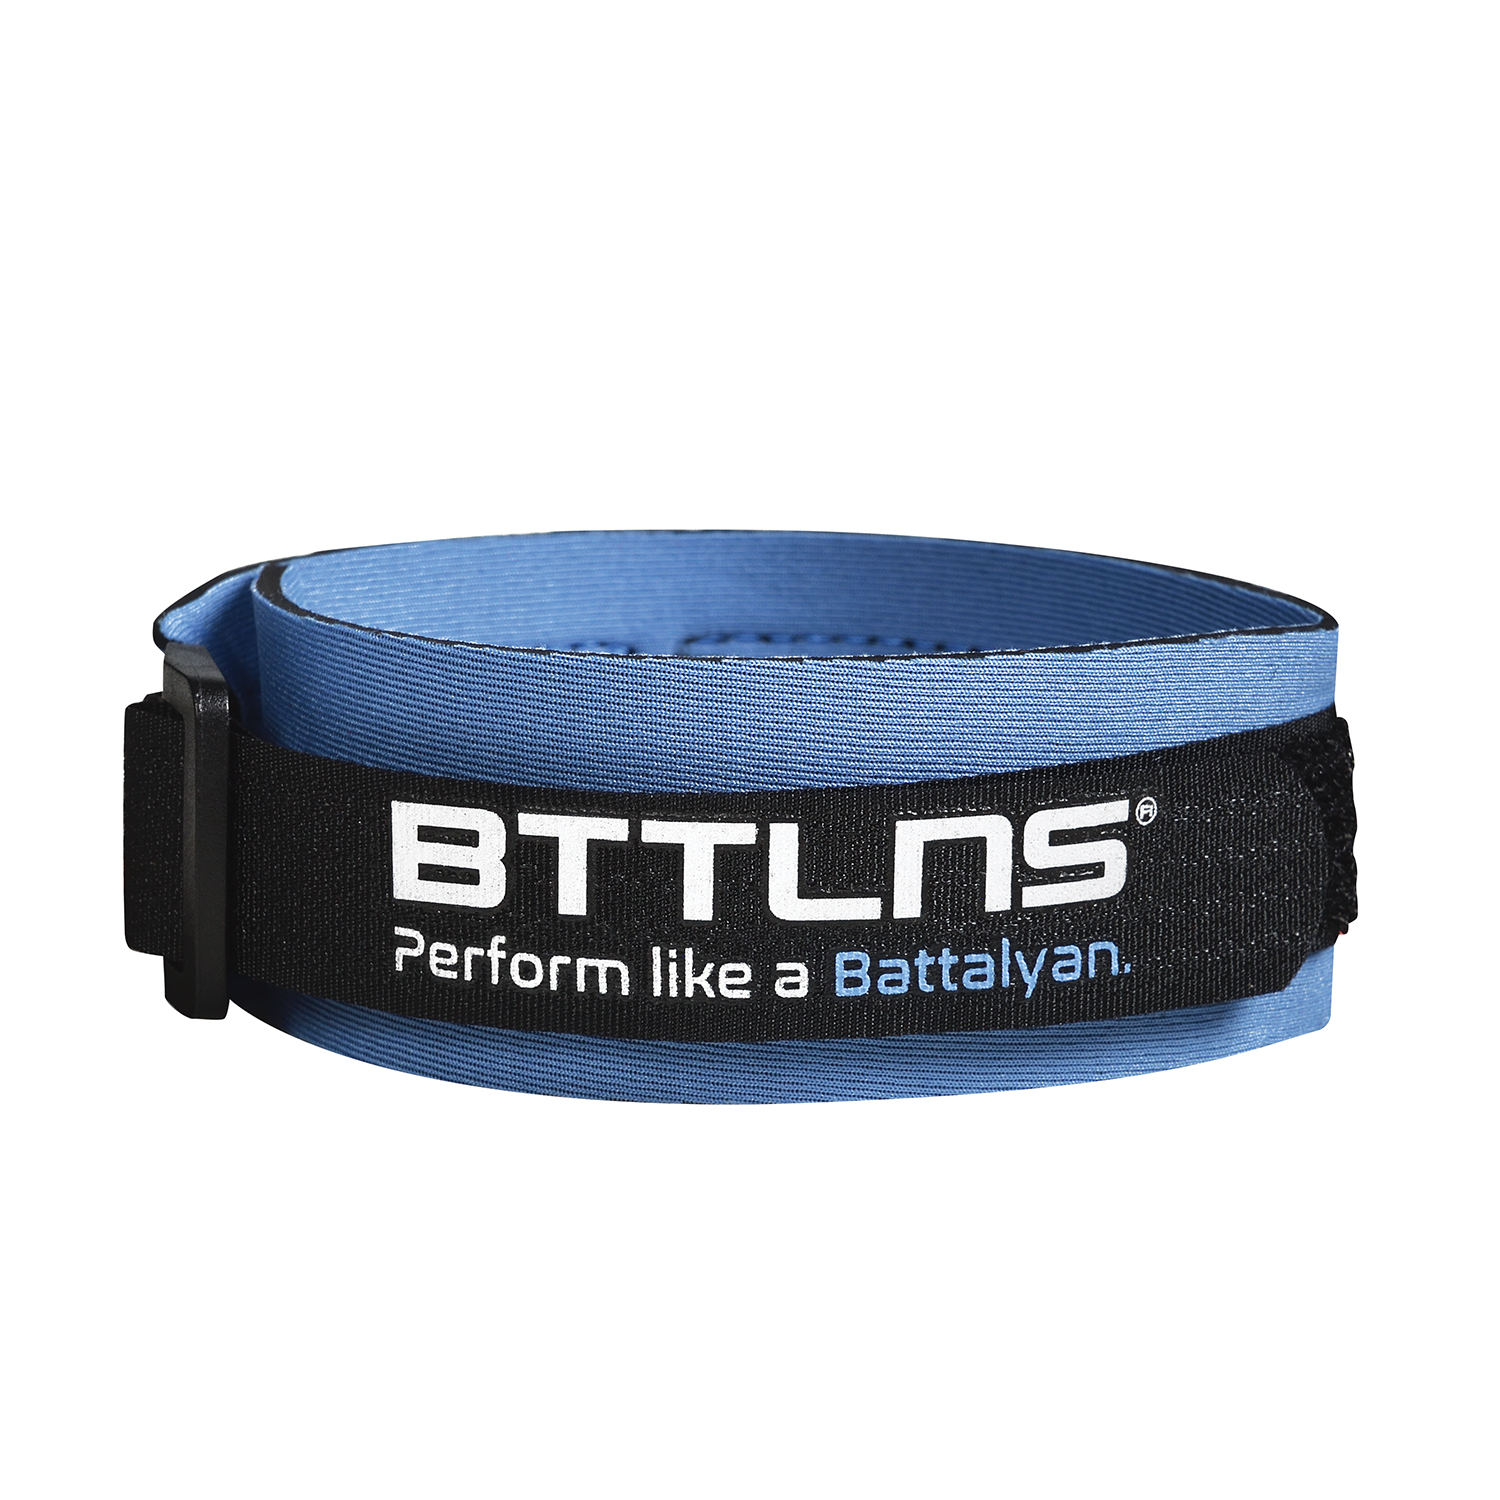 BTTLNS Timing chip strap Achilles 2.0 blue  0318002-059